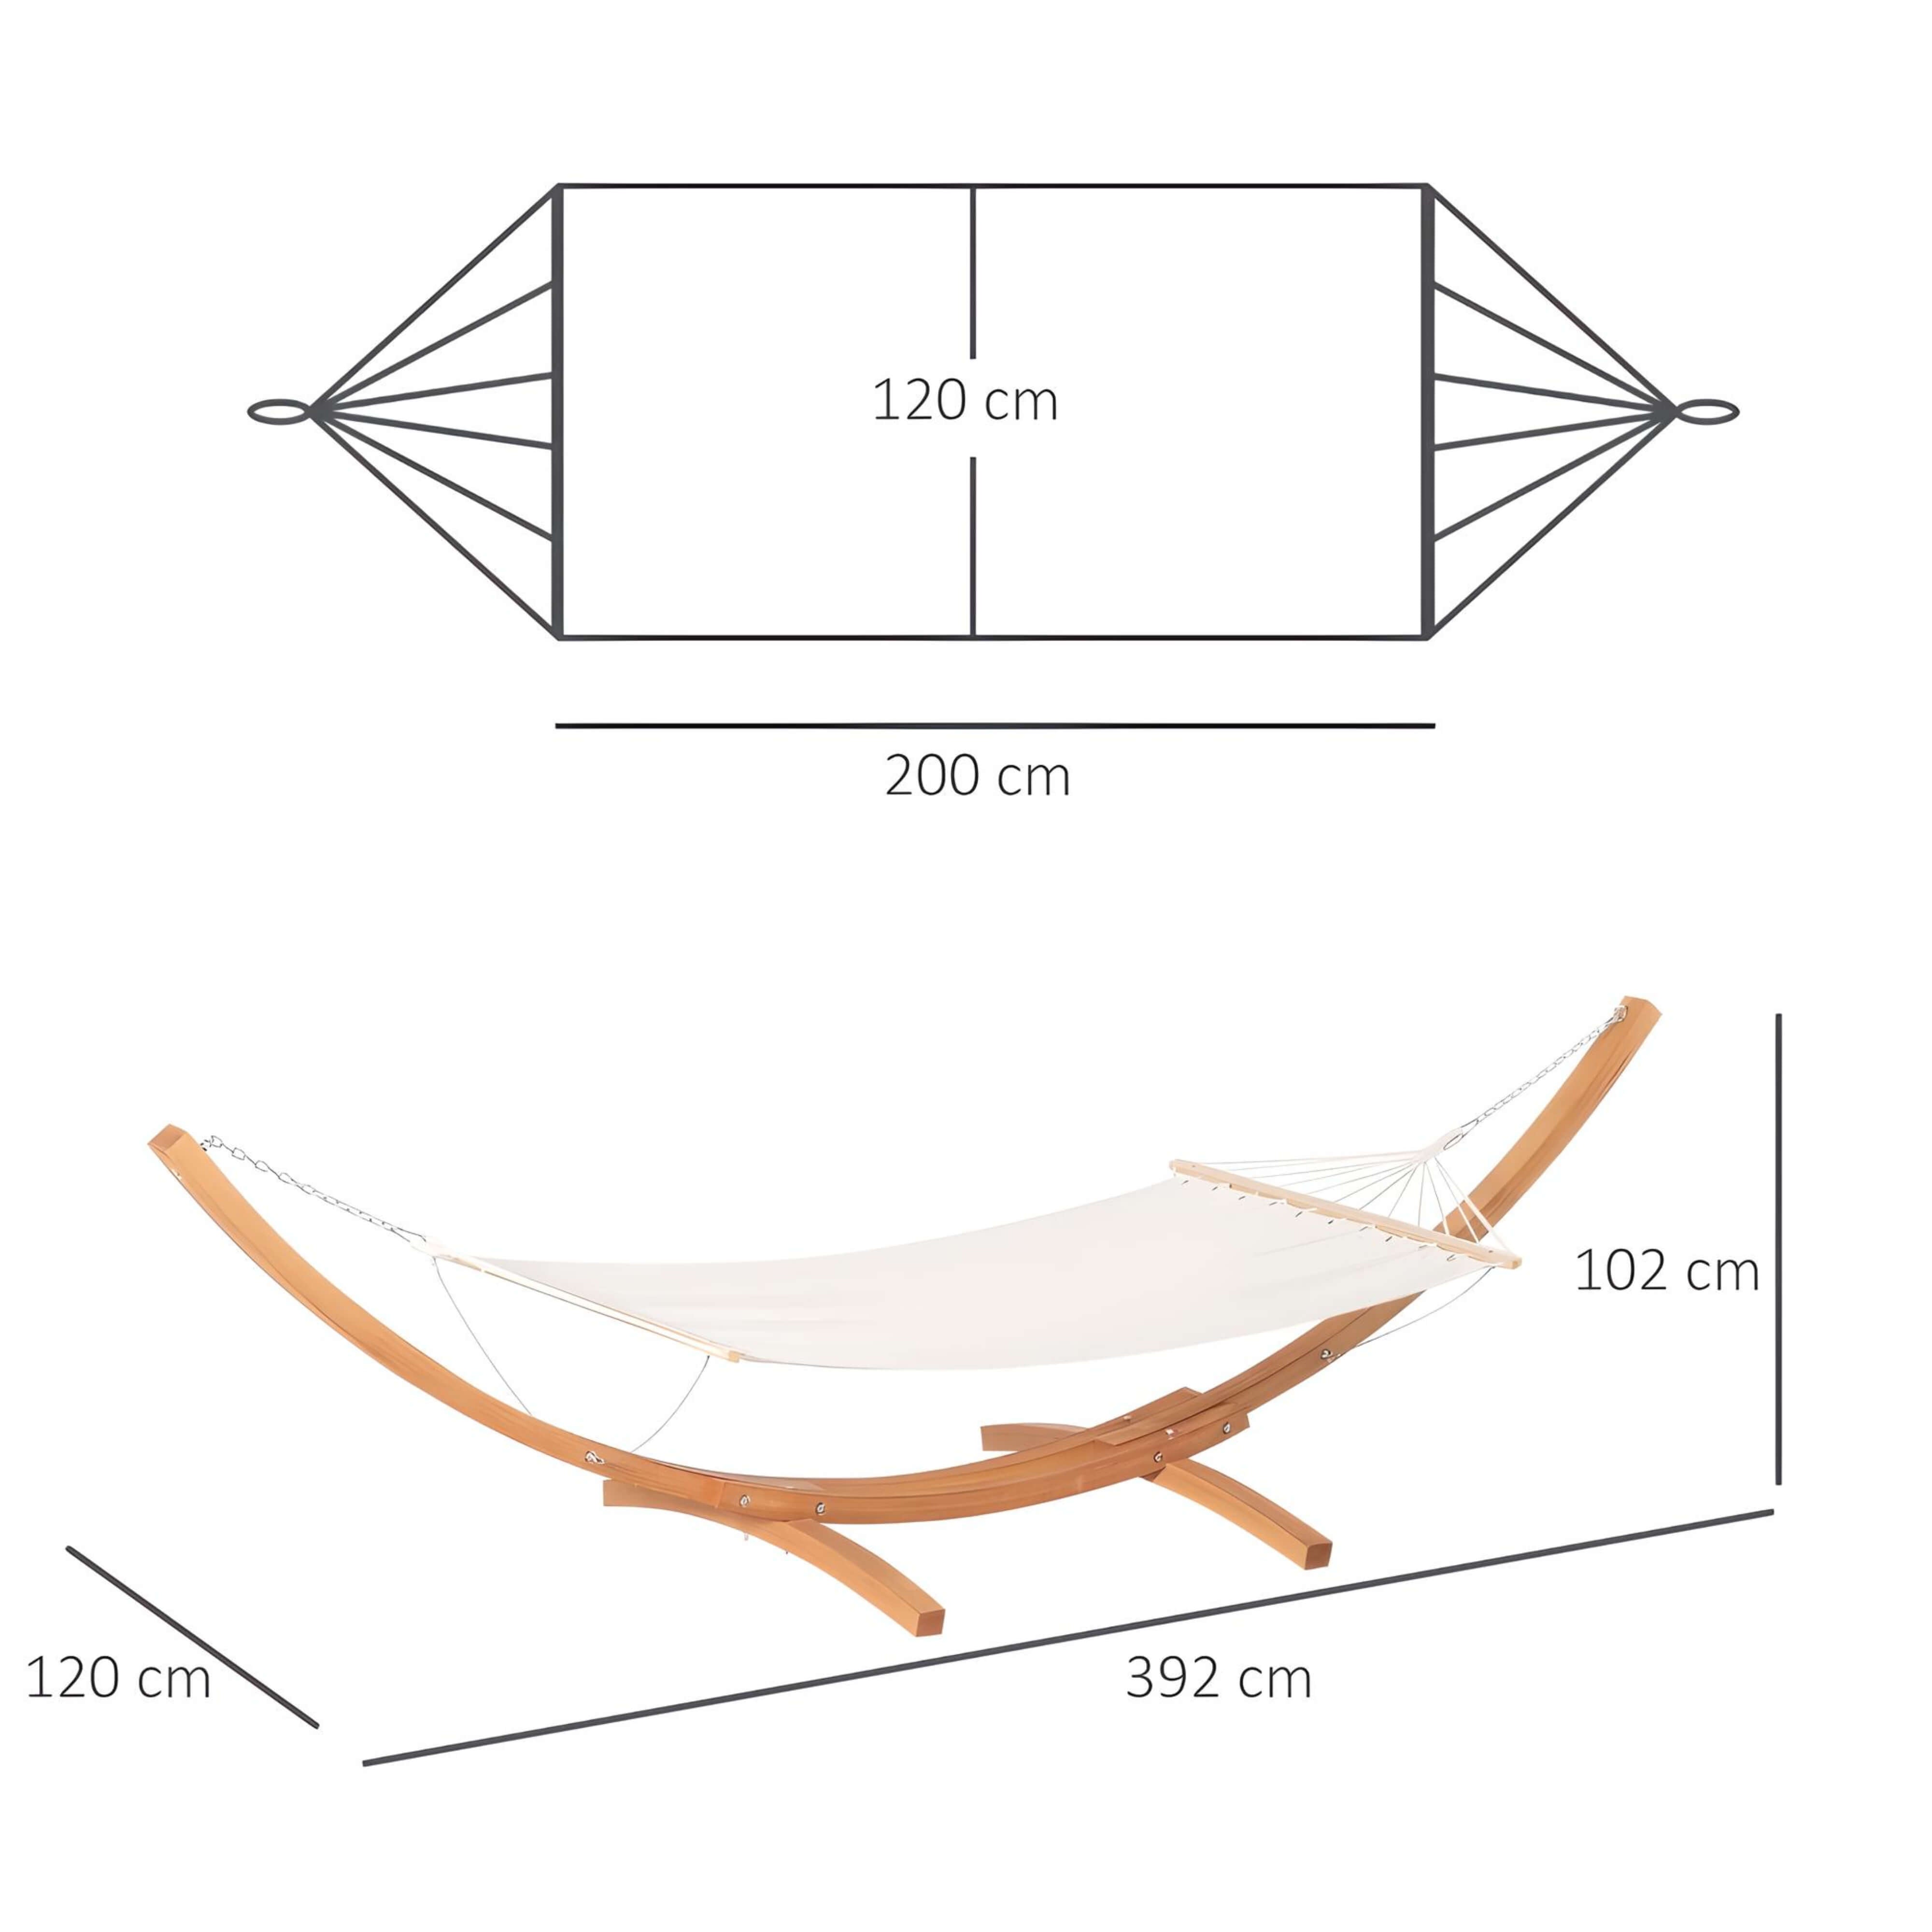 teak-wood-hammock-stand-dimension